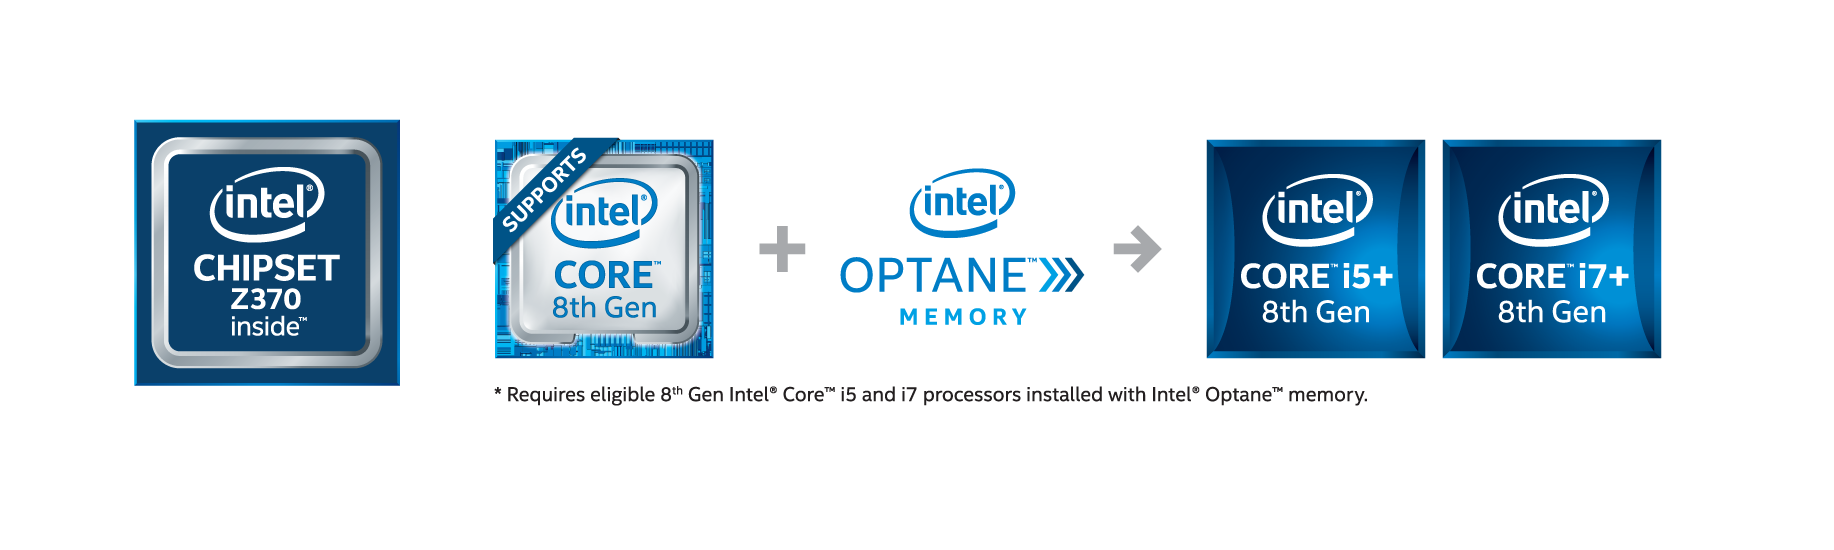 AORUS Z370, Core i CPU, Intel Optane Memory can experience Core i+ 